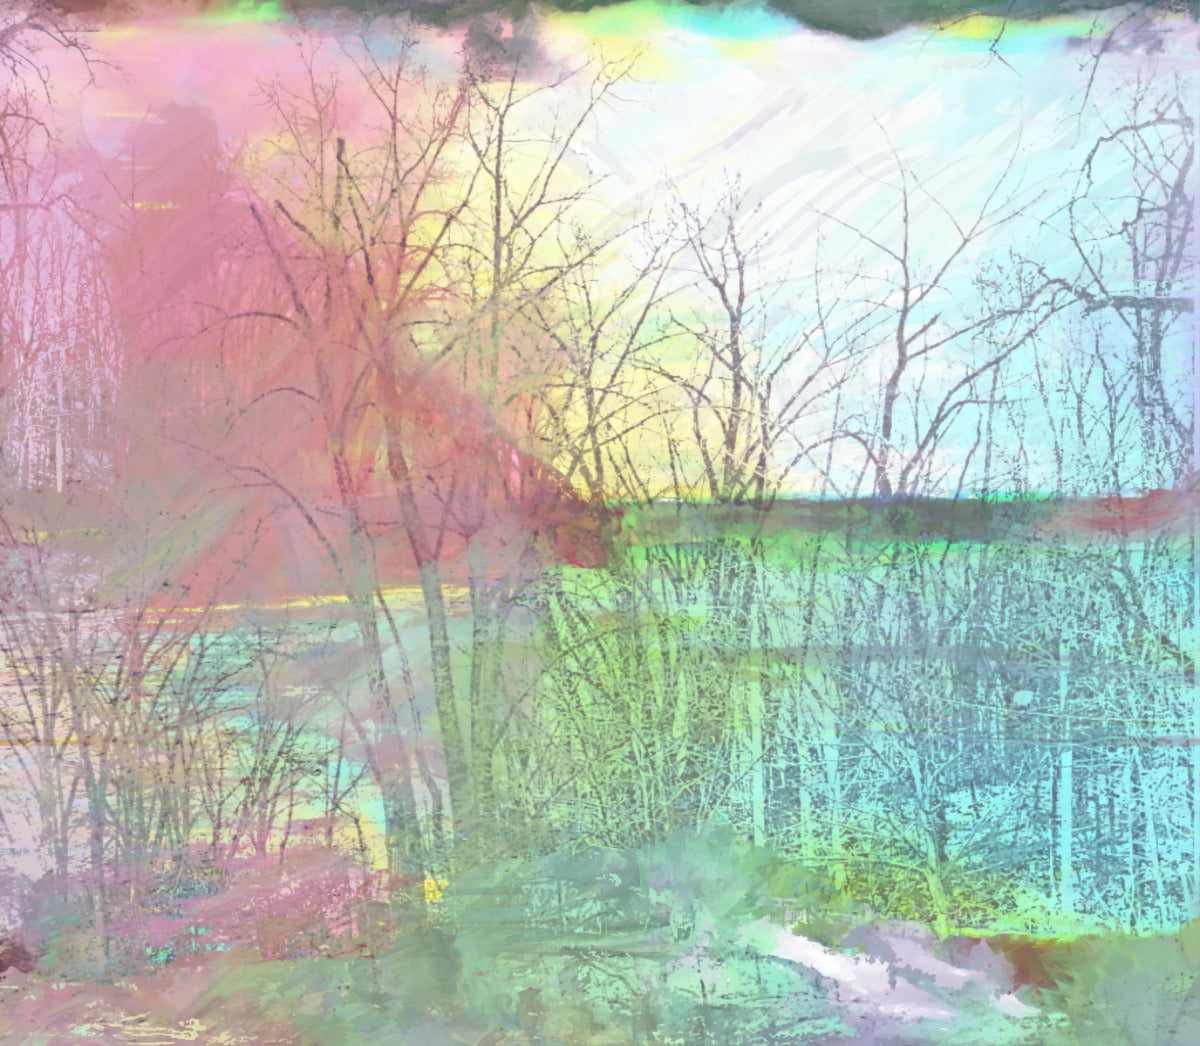 Pastel Hues of Nature: A Dreamlike Riverside by Le Boulanger